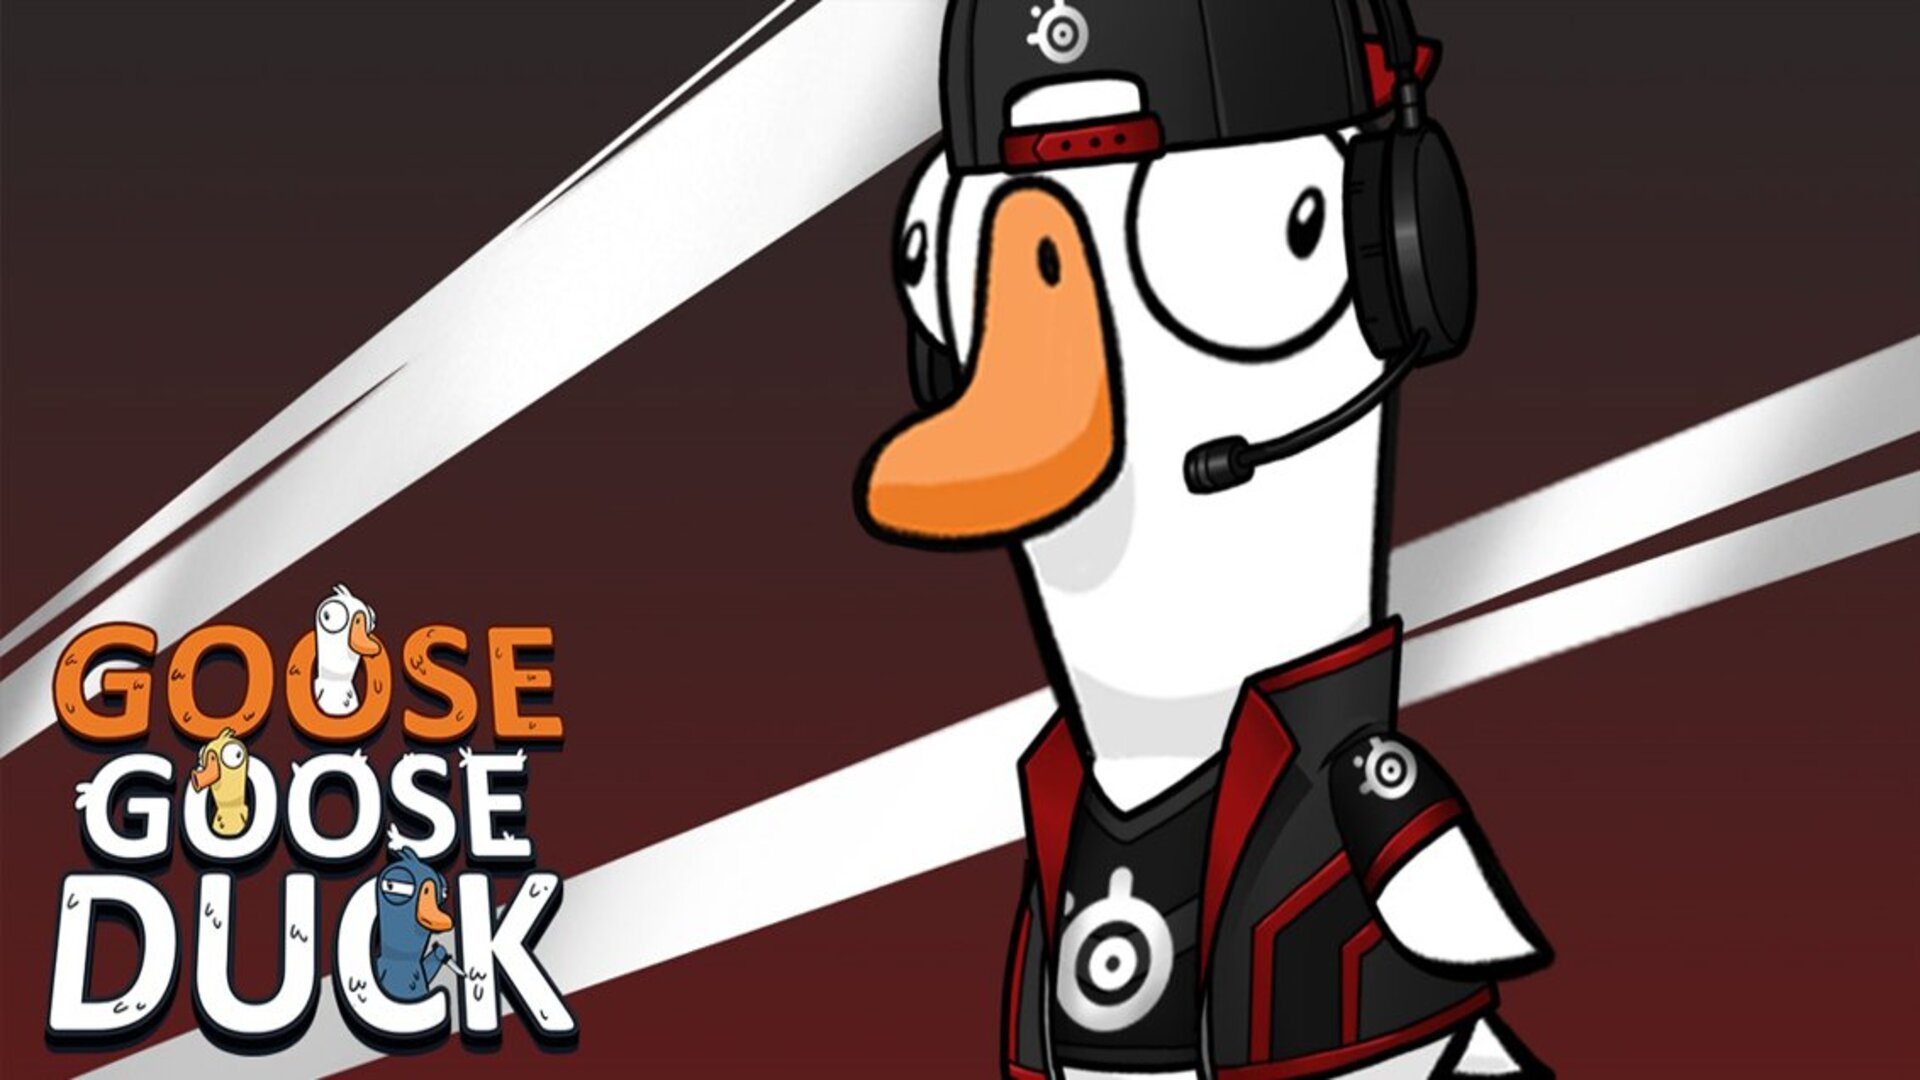 Goose Goose Duck - Steelseries Outfit Pack Digital Download CD Key